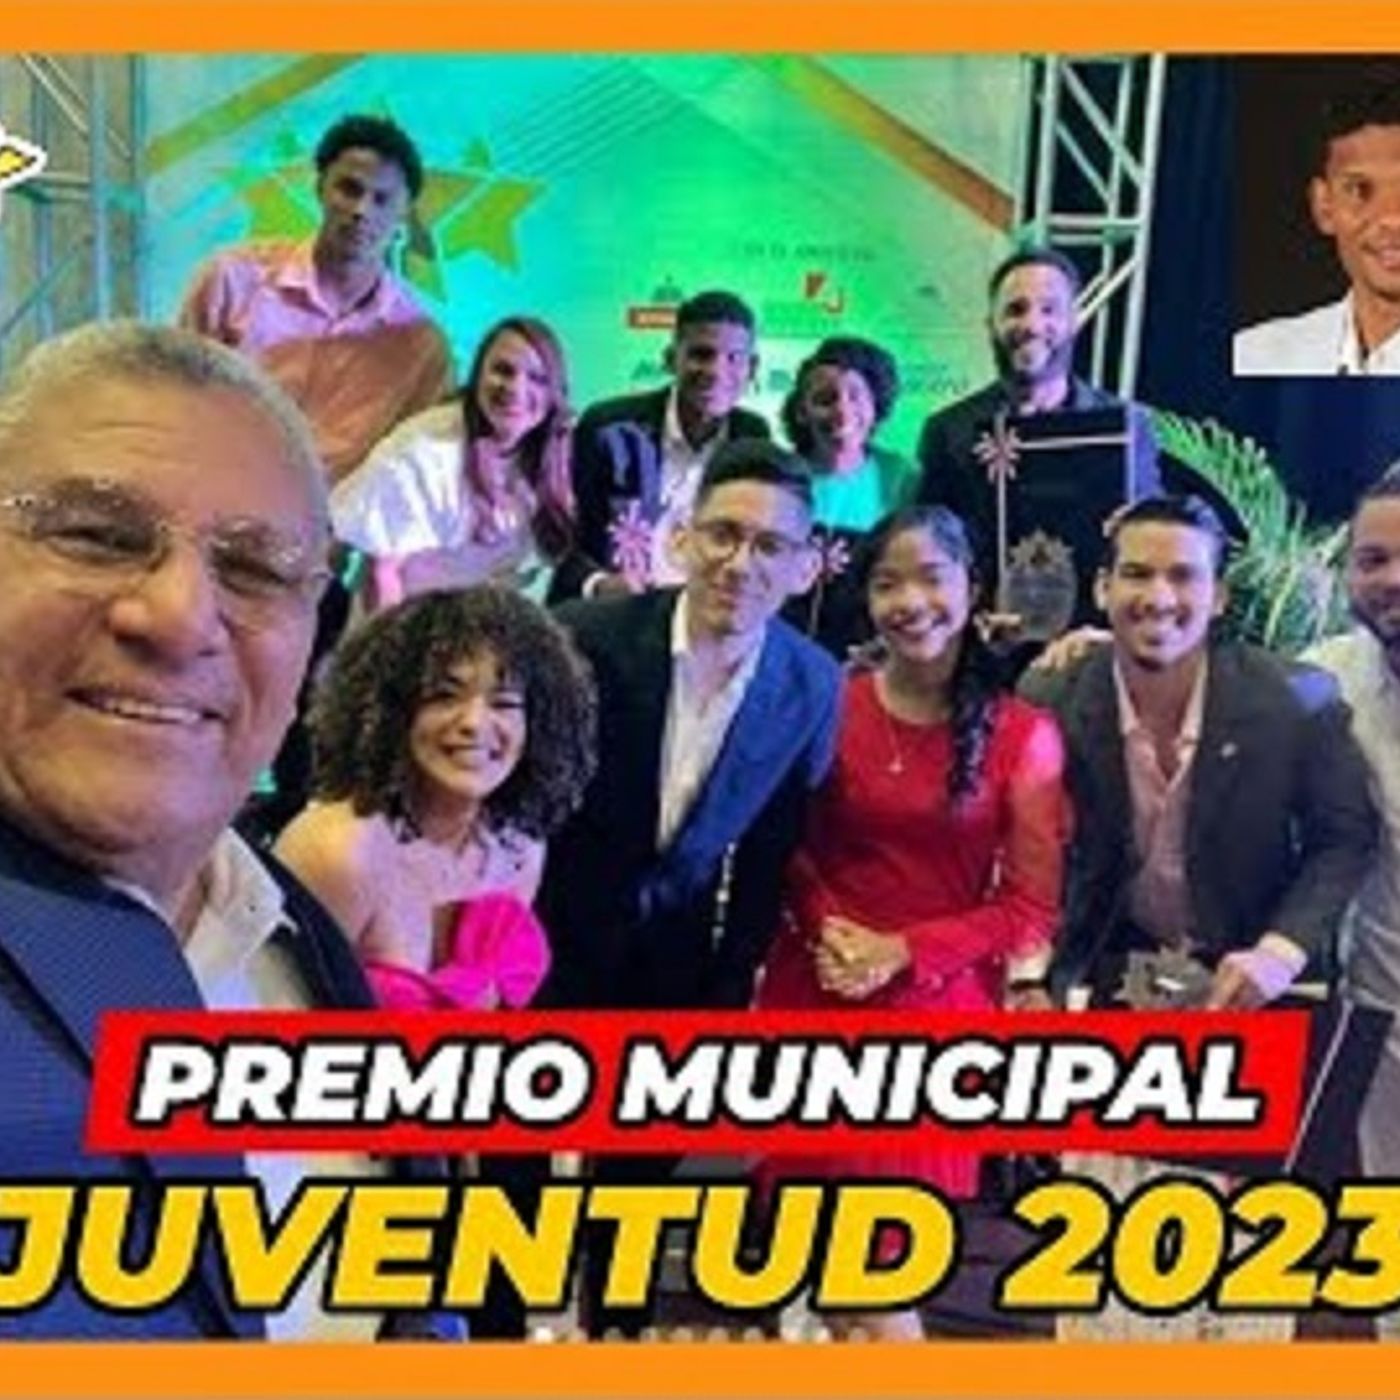 PREMIO MUNICIPAL DE JUVENTUD 2023